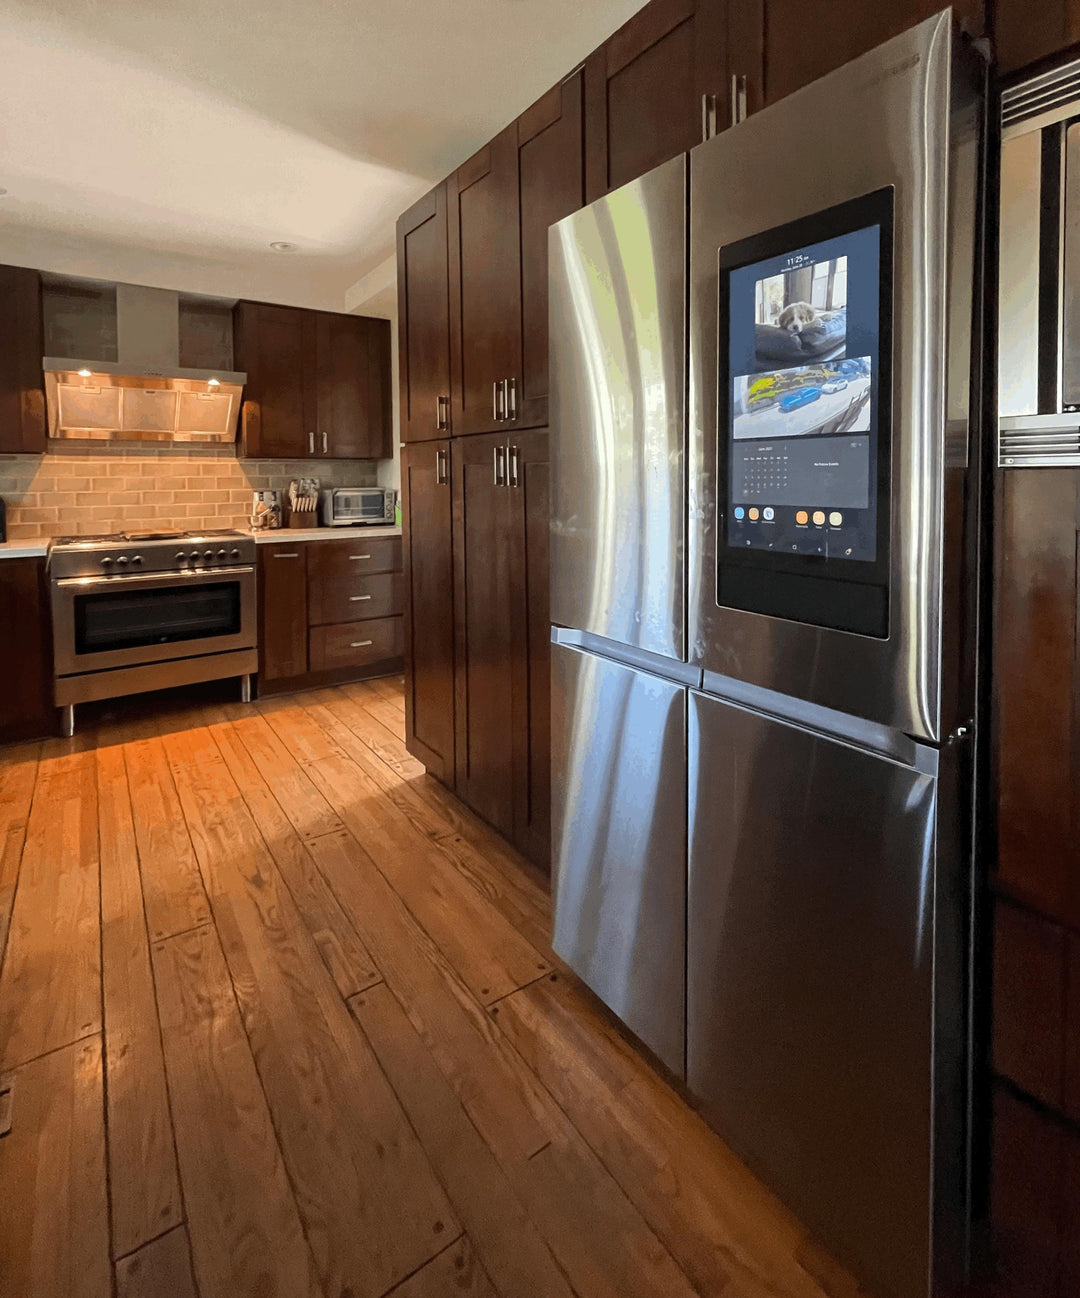 Samsung - 23 cu. ft. 4-Door Flex Counter Depth Smart Refrigerator with Family Hub - Stainless Steel